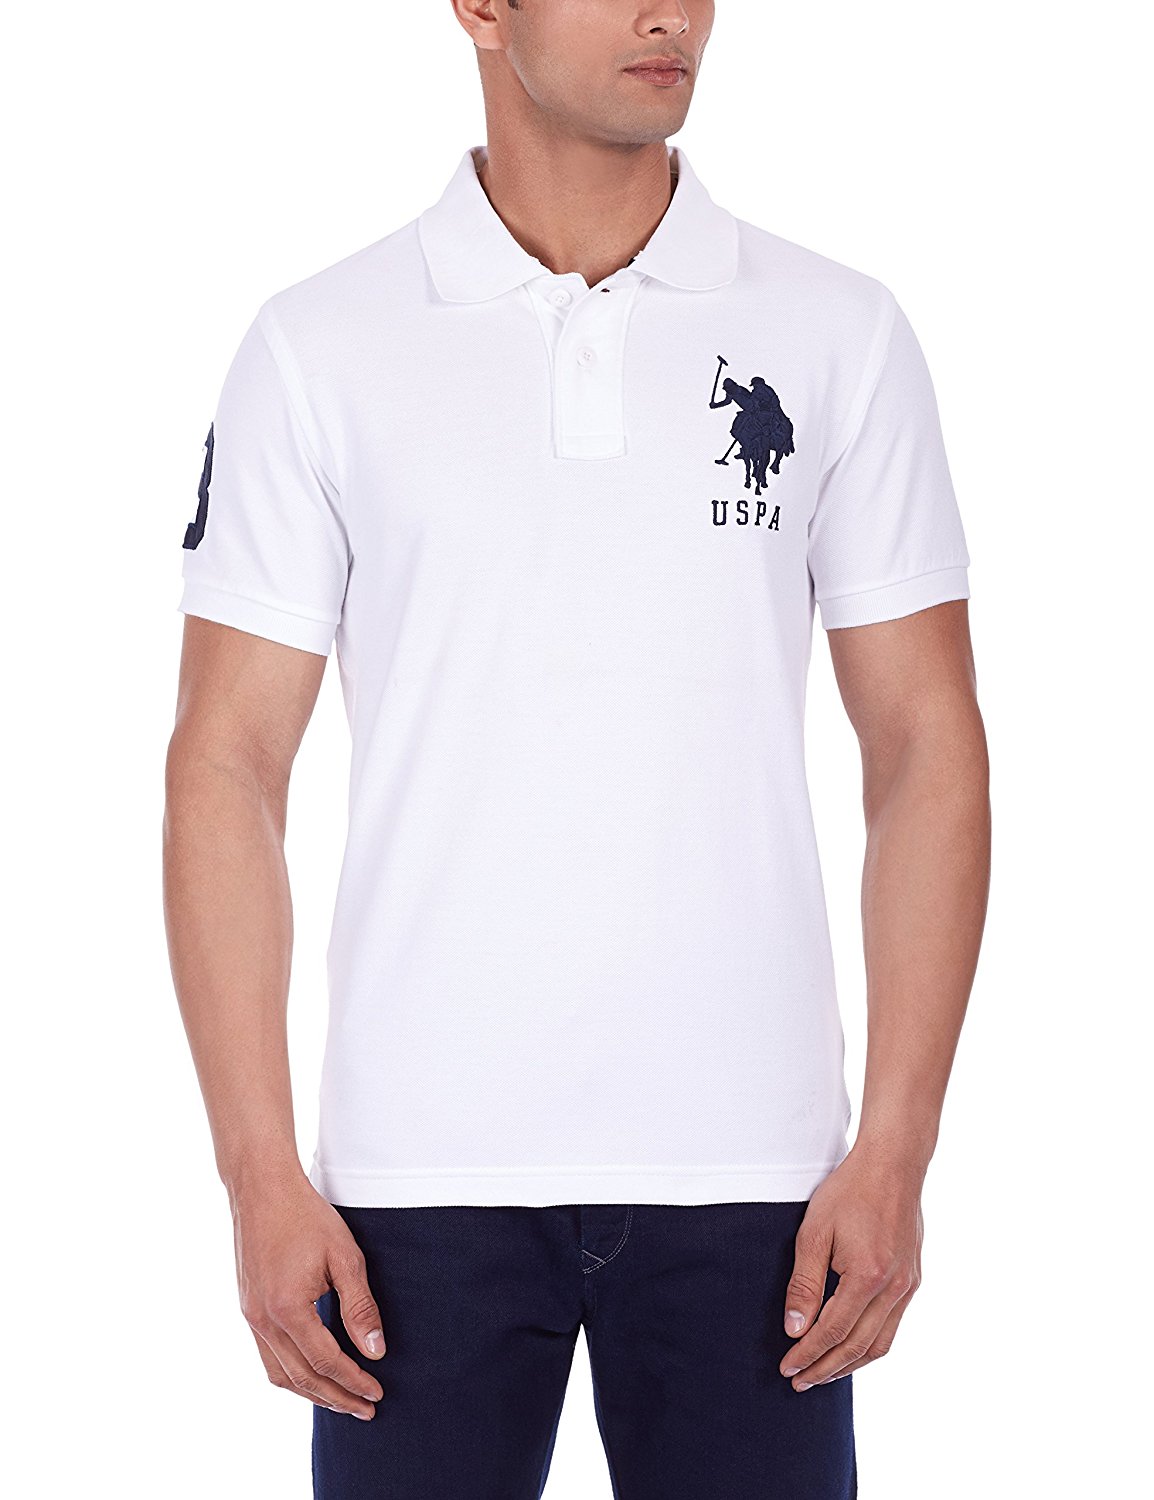 NimbleBuy: US Polo Assn T-shirt(BEST BUY)